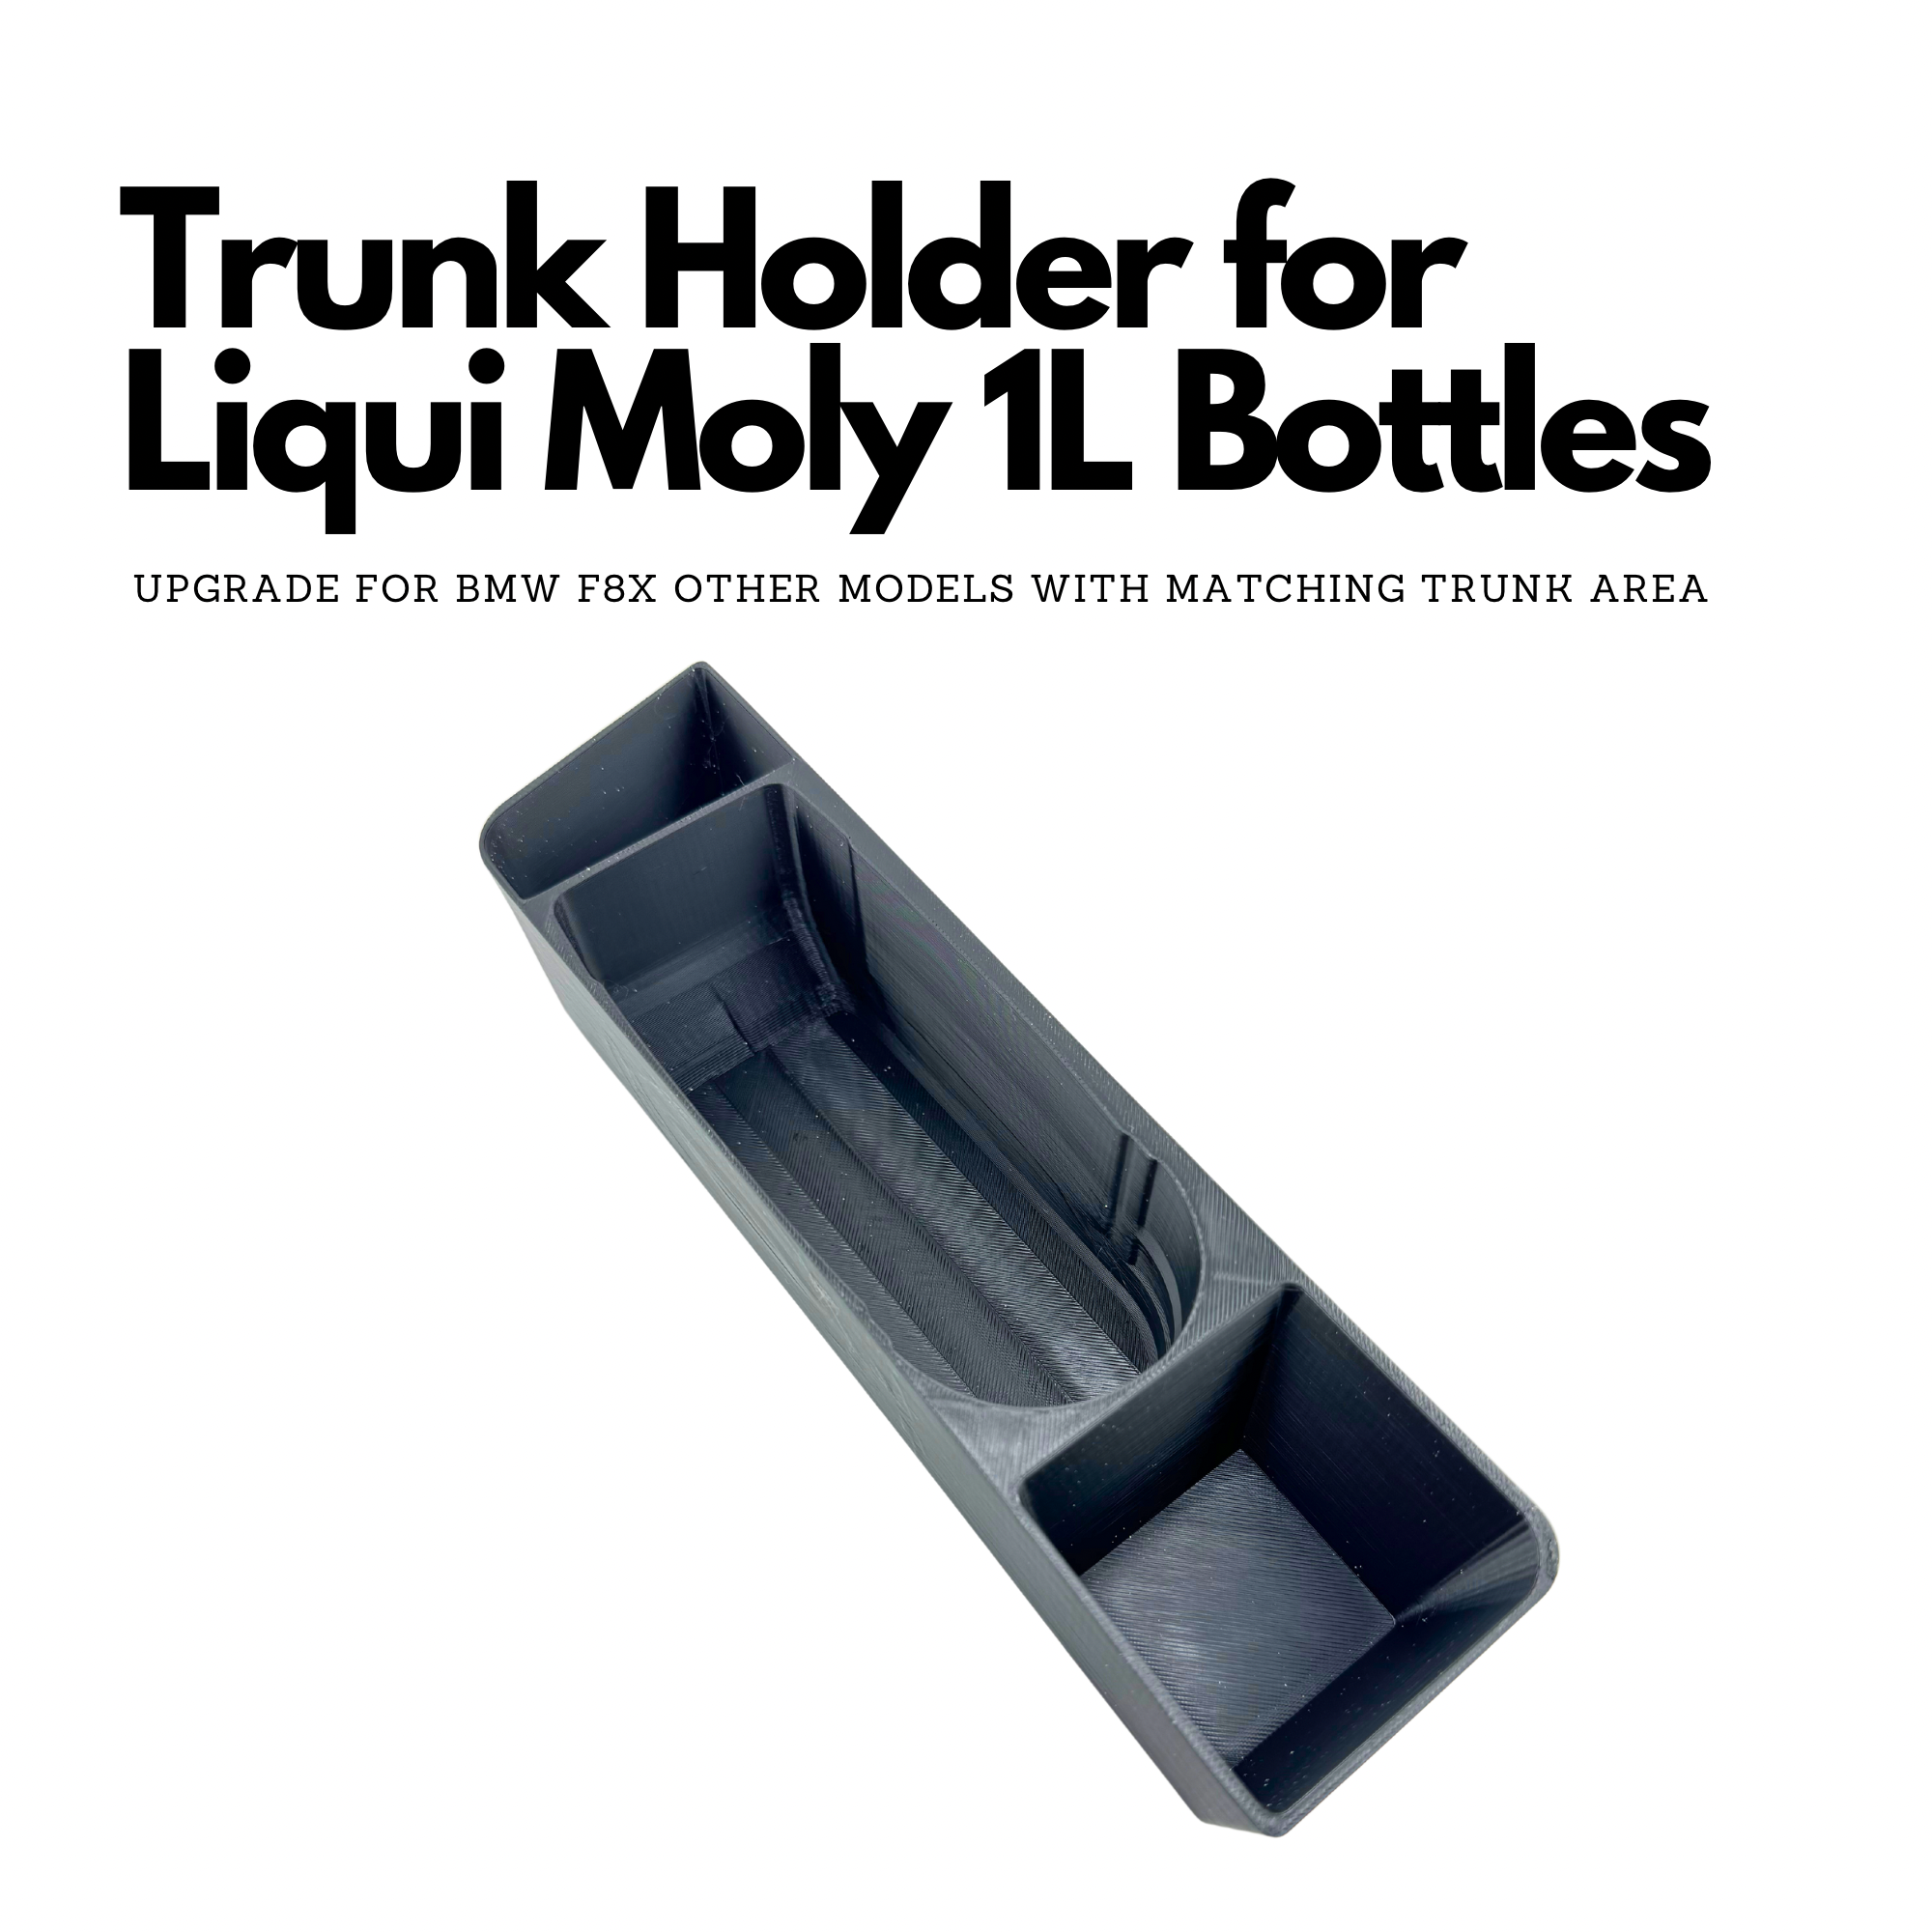 Custom-Fit Oil Bottle Trunk Holder for BMW F Series f32 f80 M3 M4 435i 428i - Secure Mount for 1-Liter Liqui Moly BMW OIL